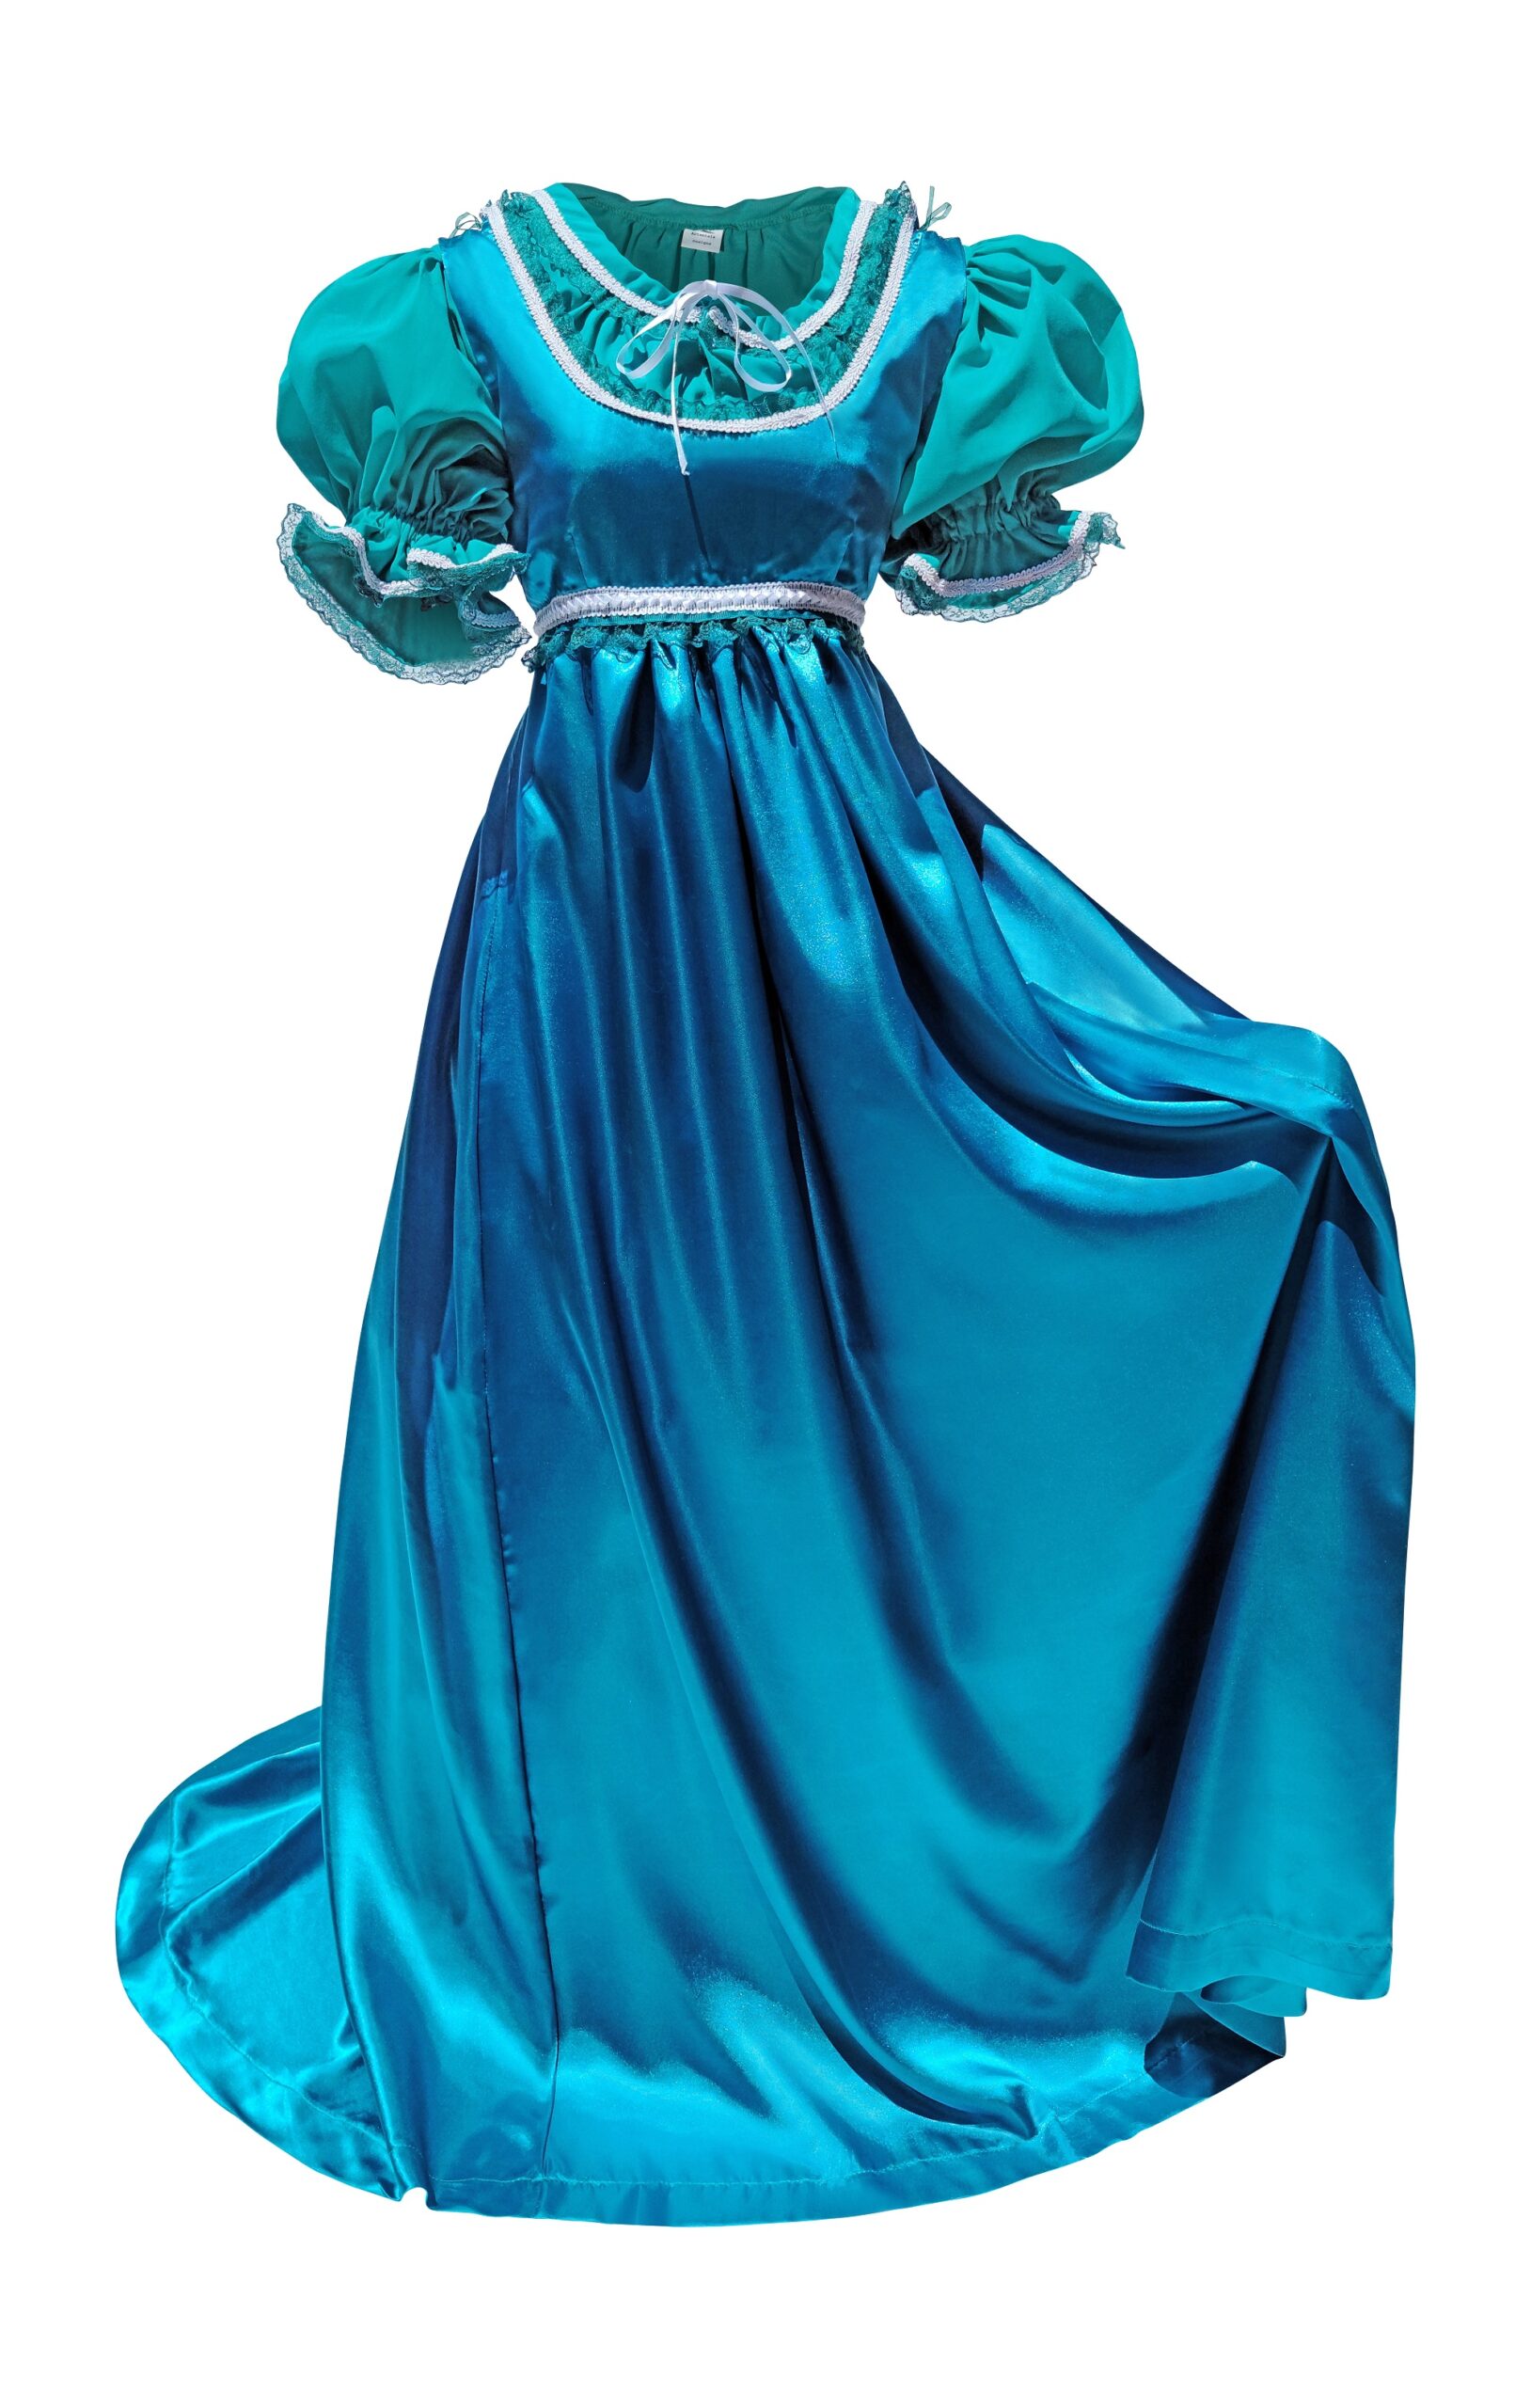 Regency Satin Ball Gown